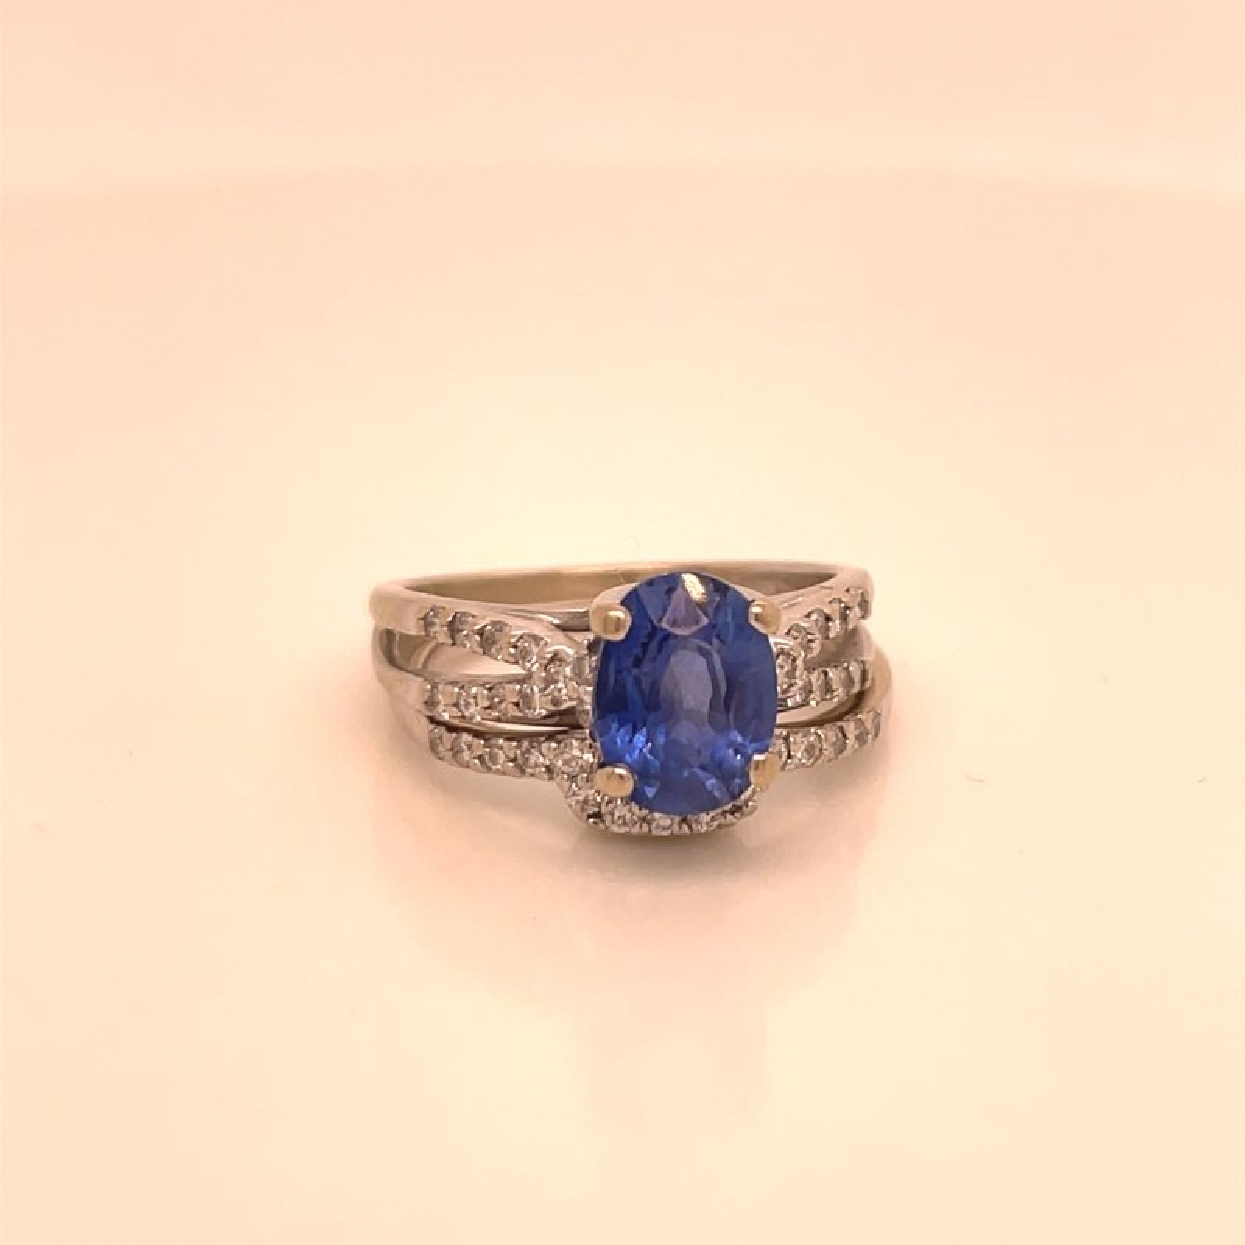 18K White Gold Sapphire and Diamond Engagement Ring with Matching 18K White Gold Diamond Band

Size 5